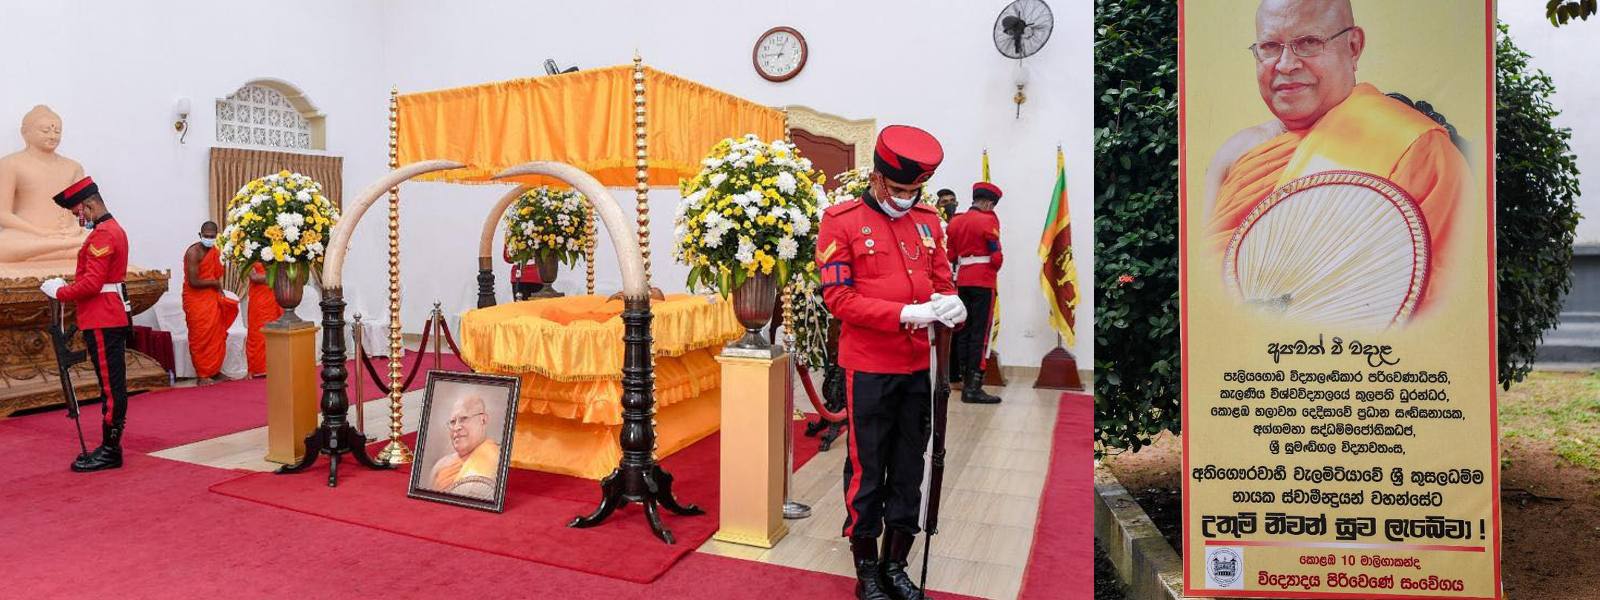 President pays last respects to Ven. Kusaladamma Thera